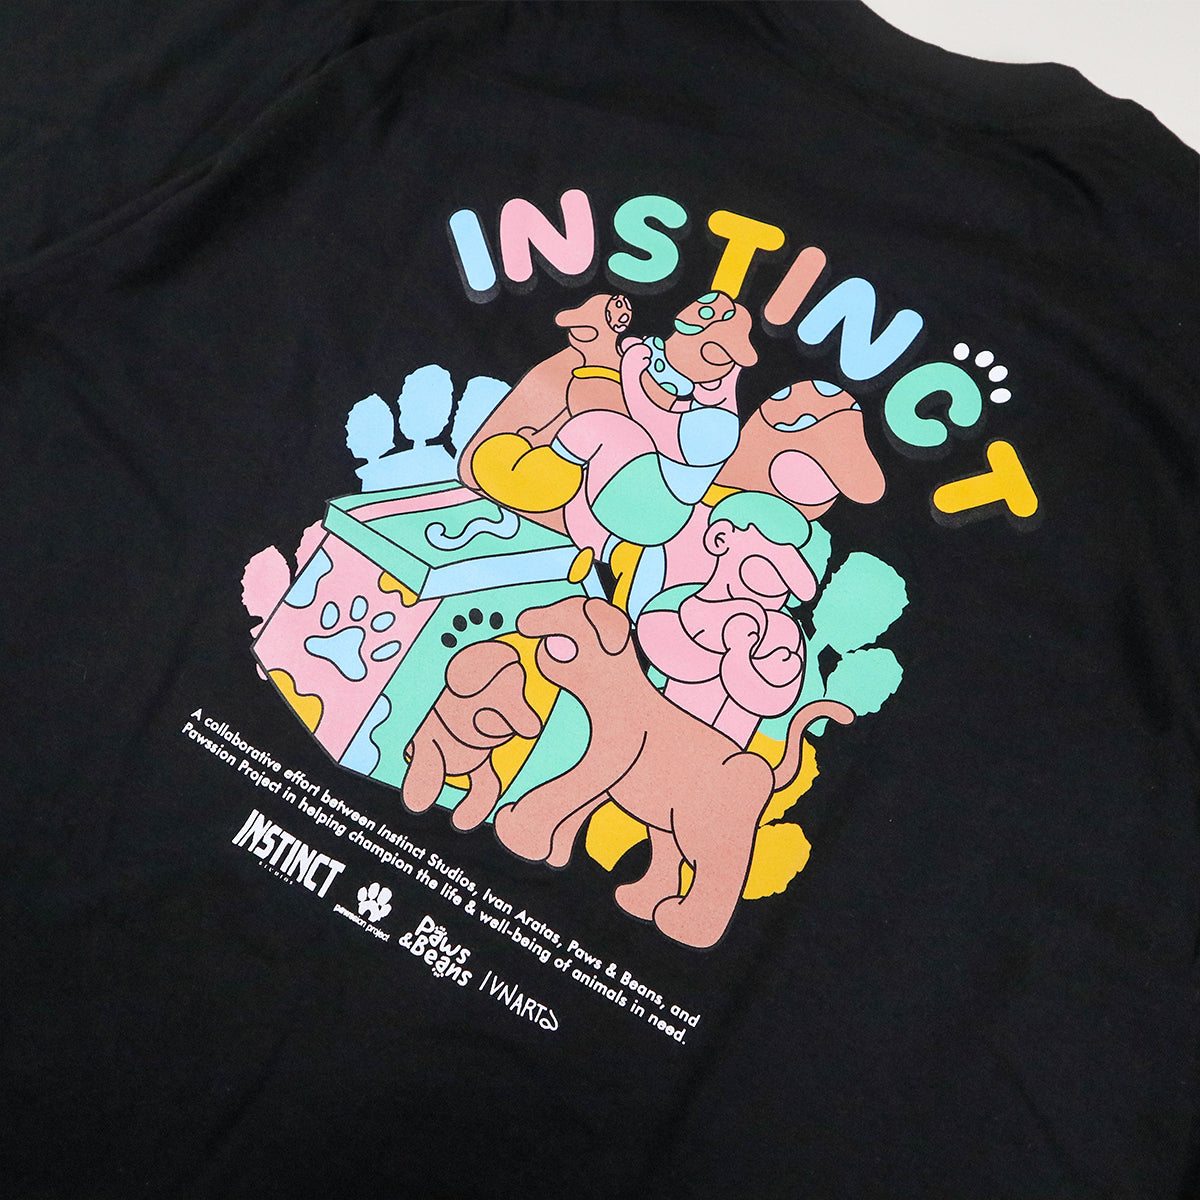 Champion of Life Shirt Shirt Instinct Studios 